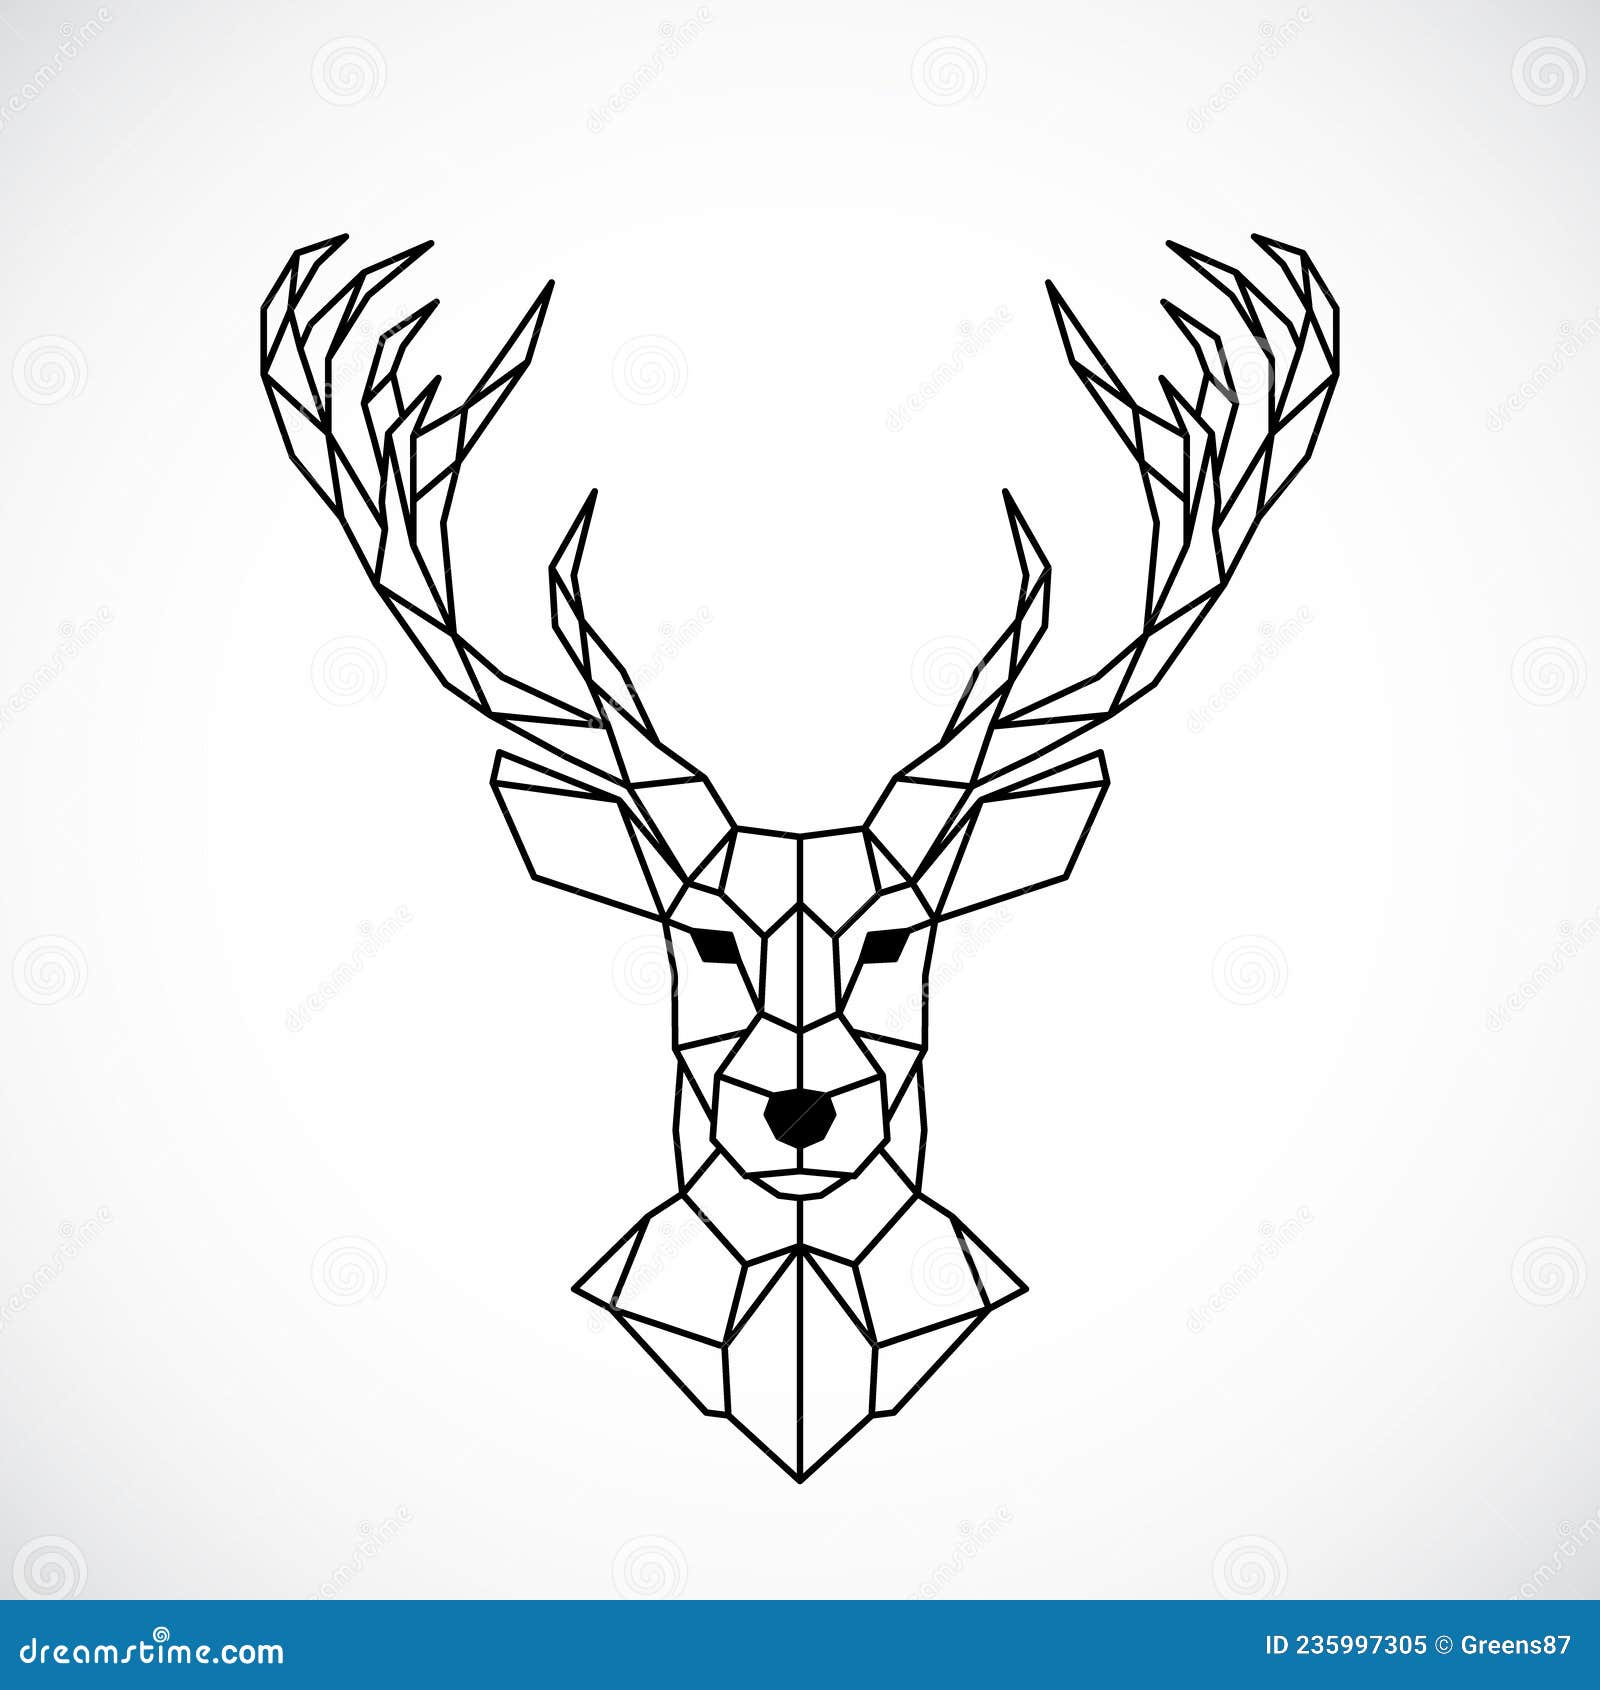 Deer Head Tattoo Geometric Figures Stock Illustration  Download Image Now   Abstract Animal Animal Body Part  iStock